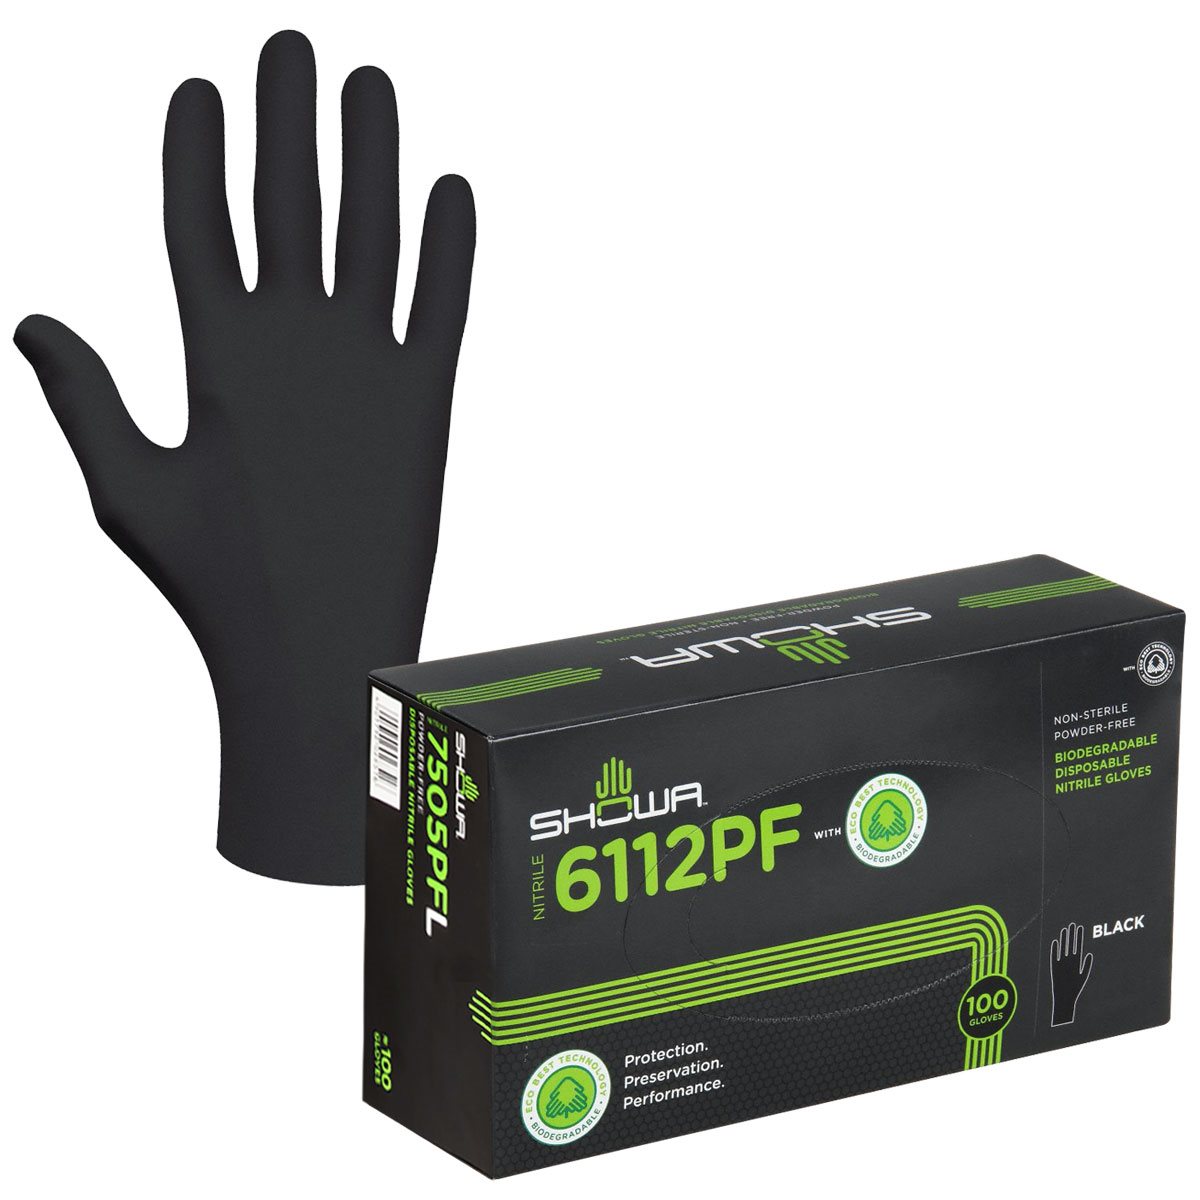 Showa Biodegradable Glove Large (100 / Box)